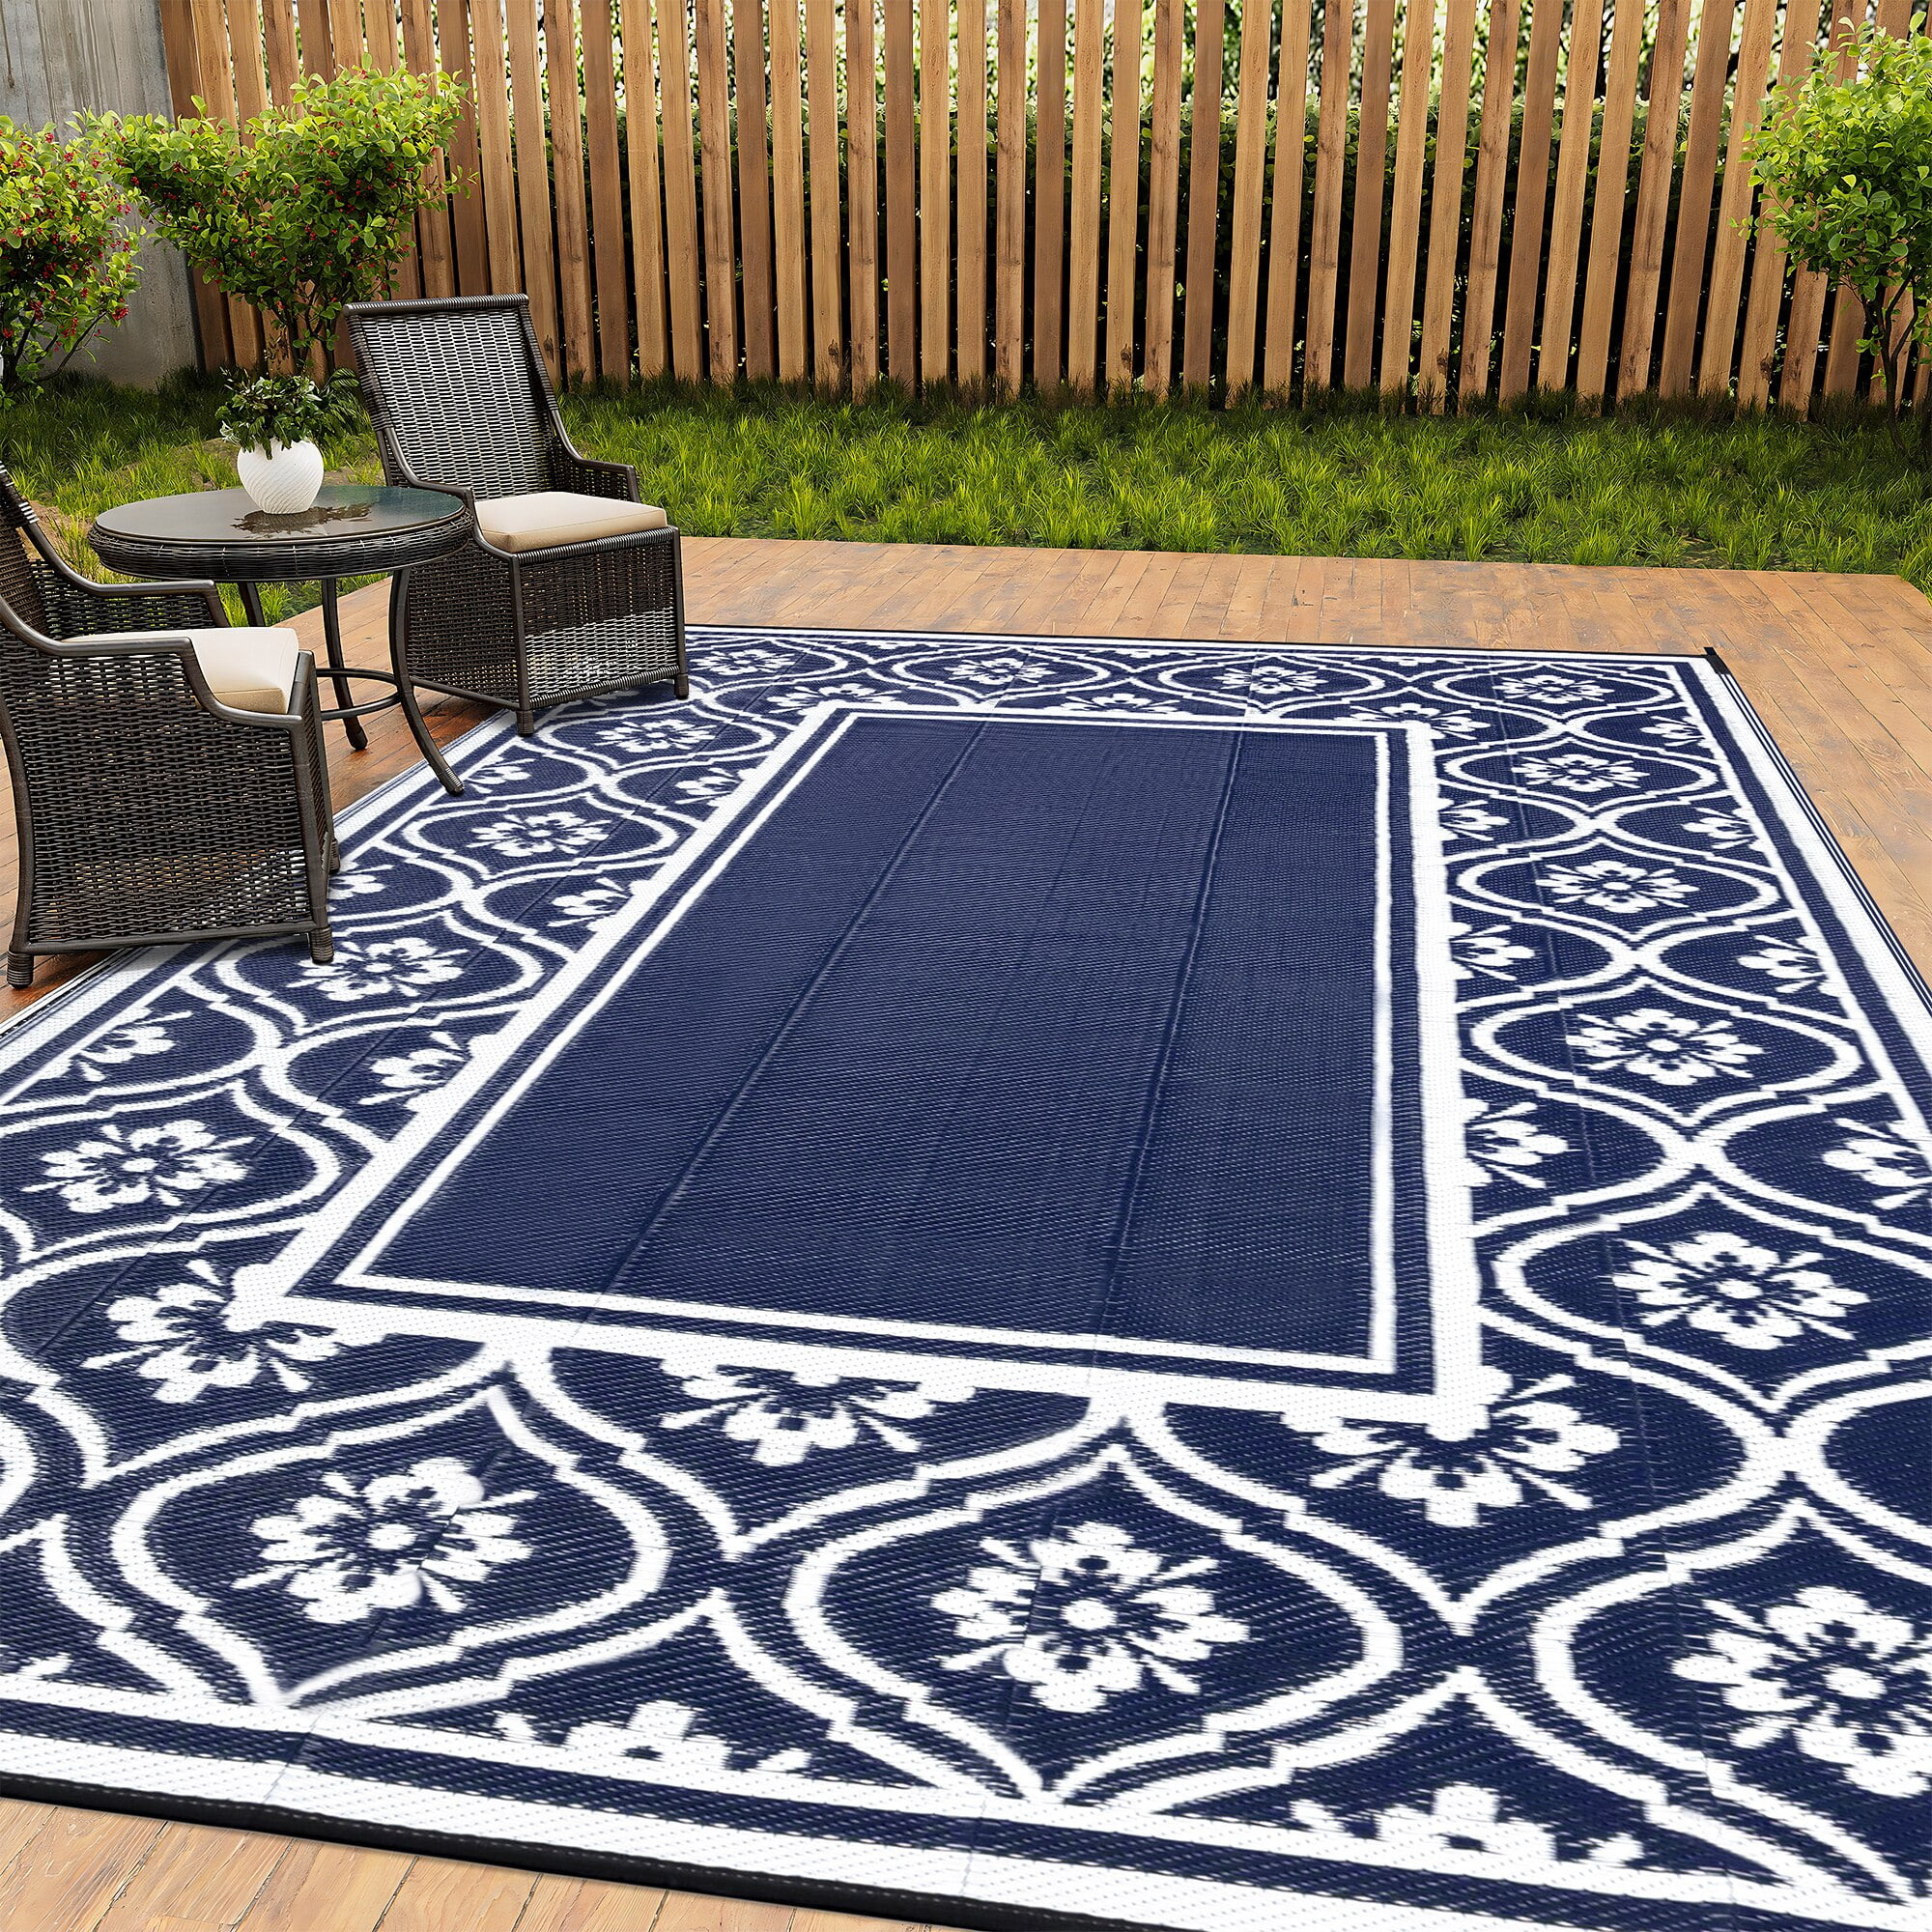 Non Slip Extra Large Outdoor Rugs Garden Patio Carpet Washable